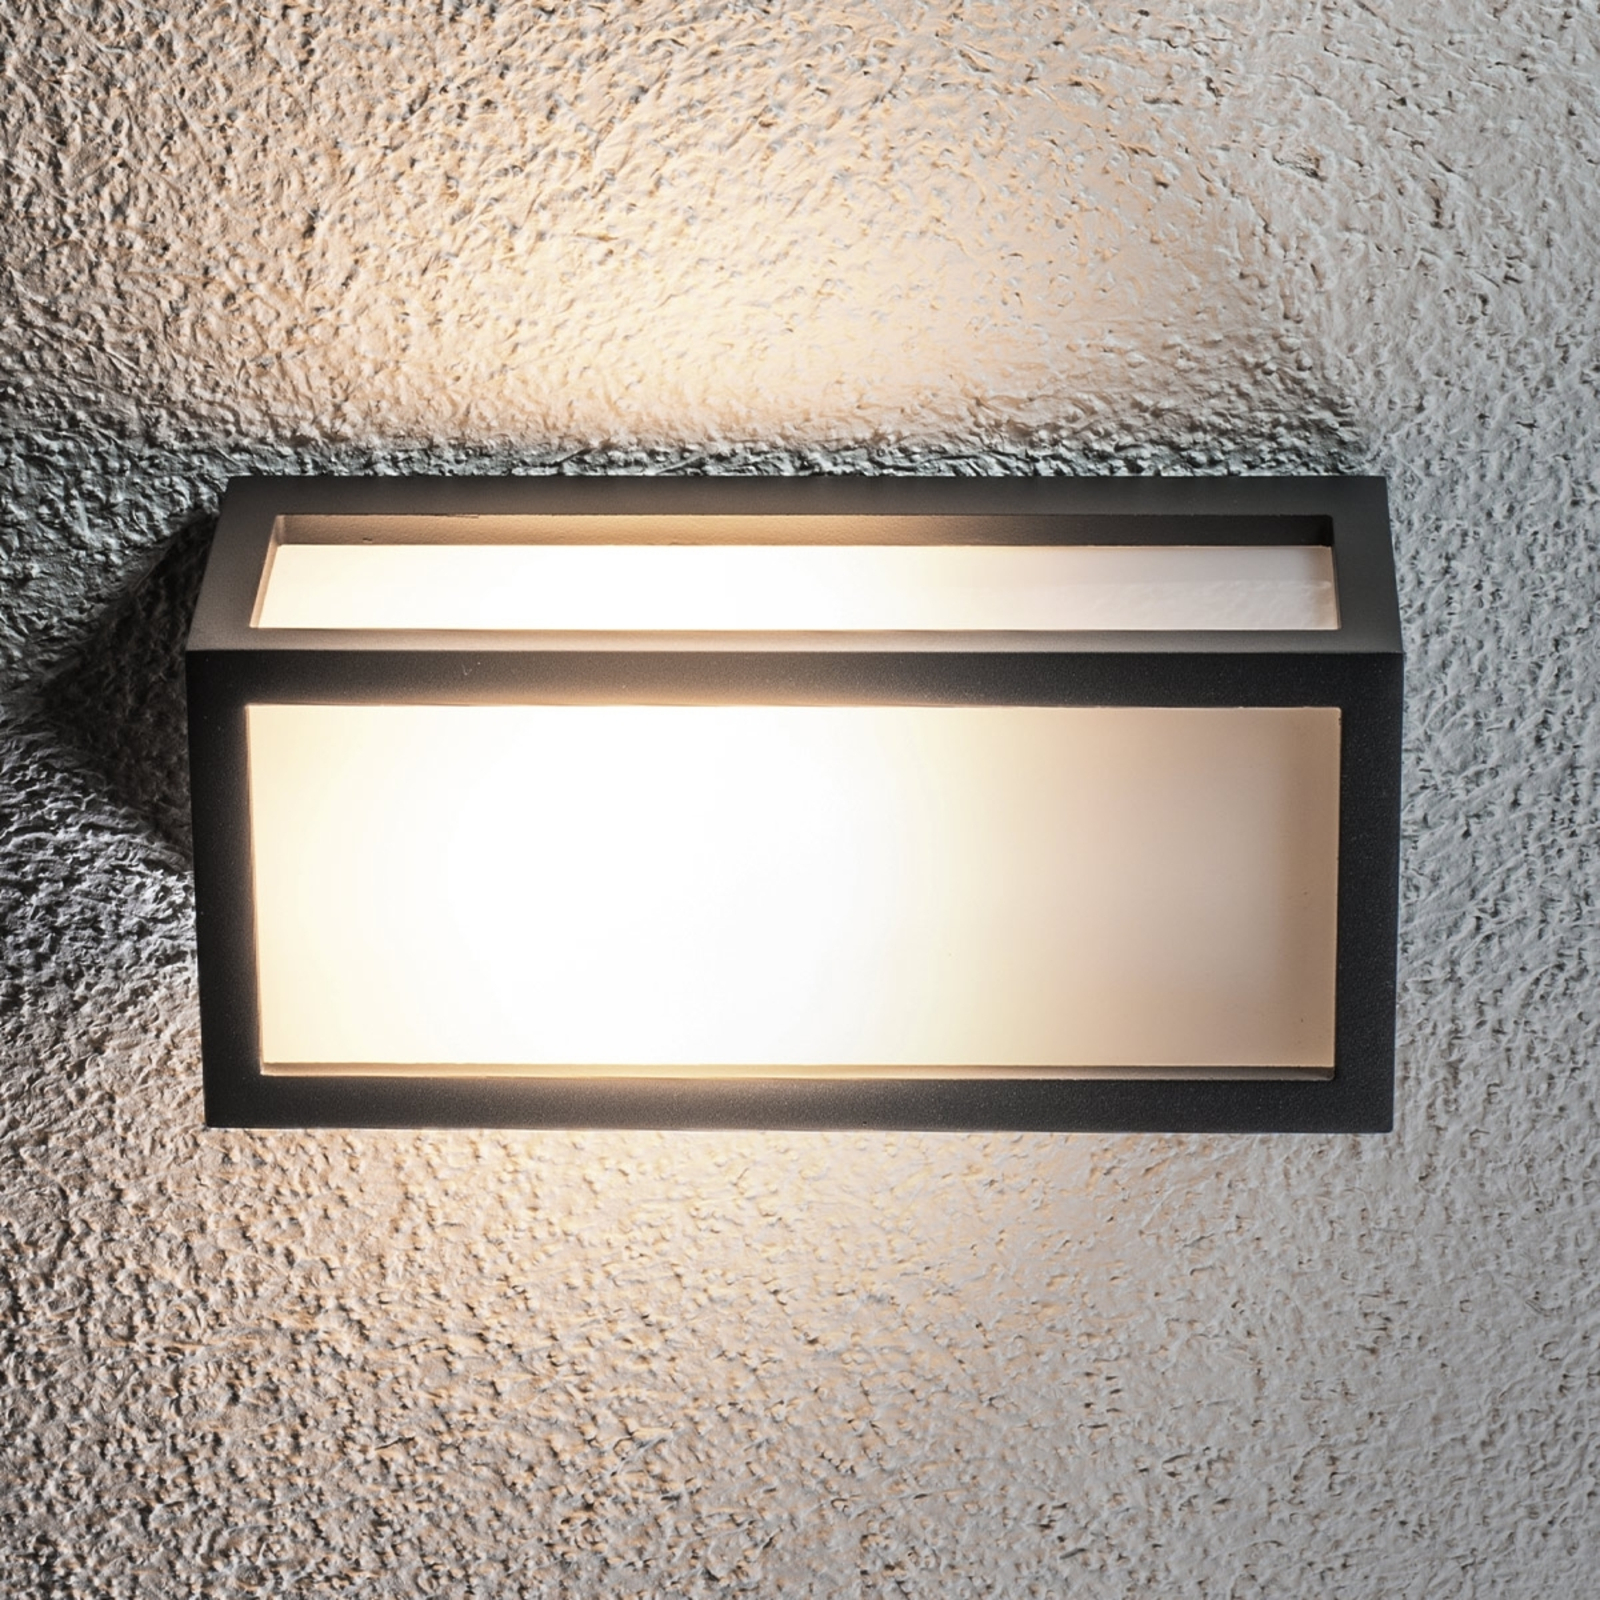 Decorative energy-saving outdoor wall light Tame